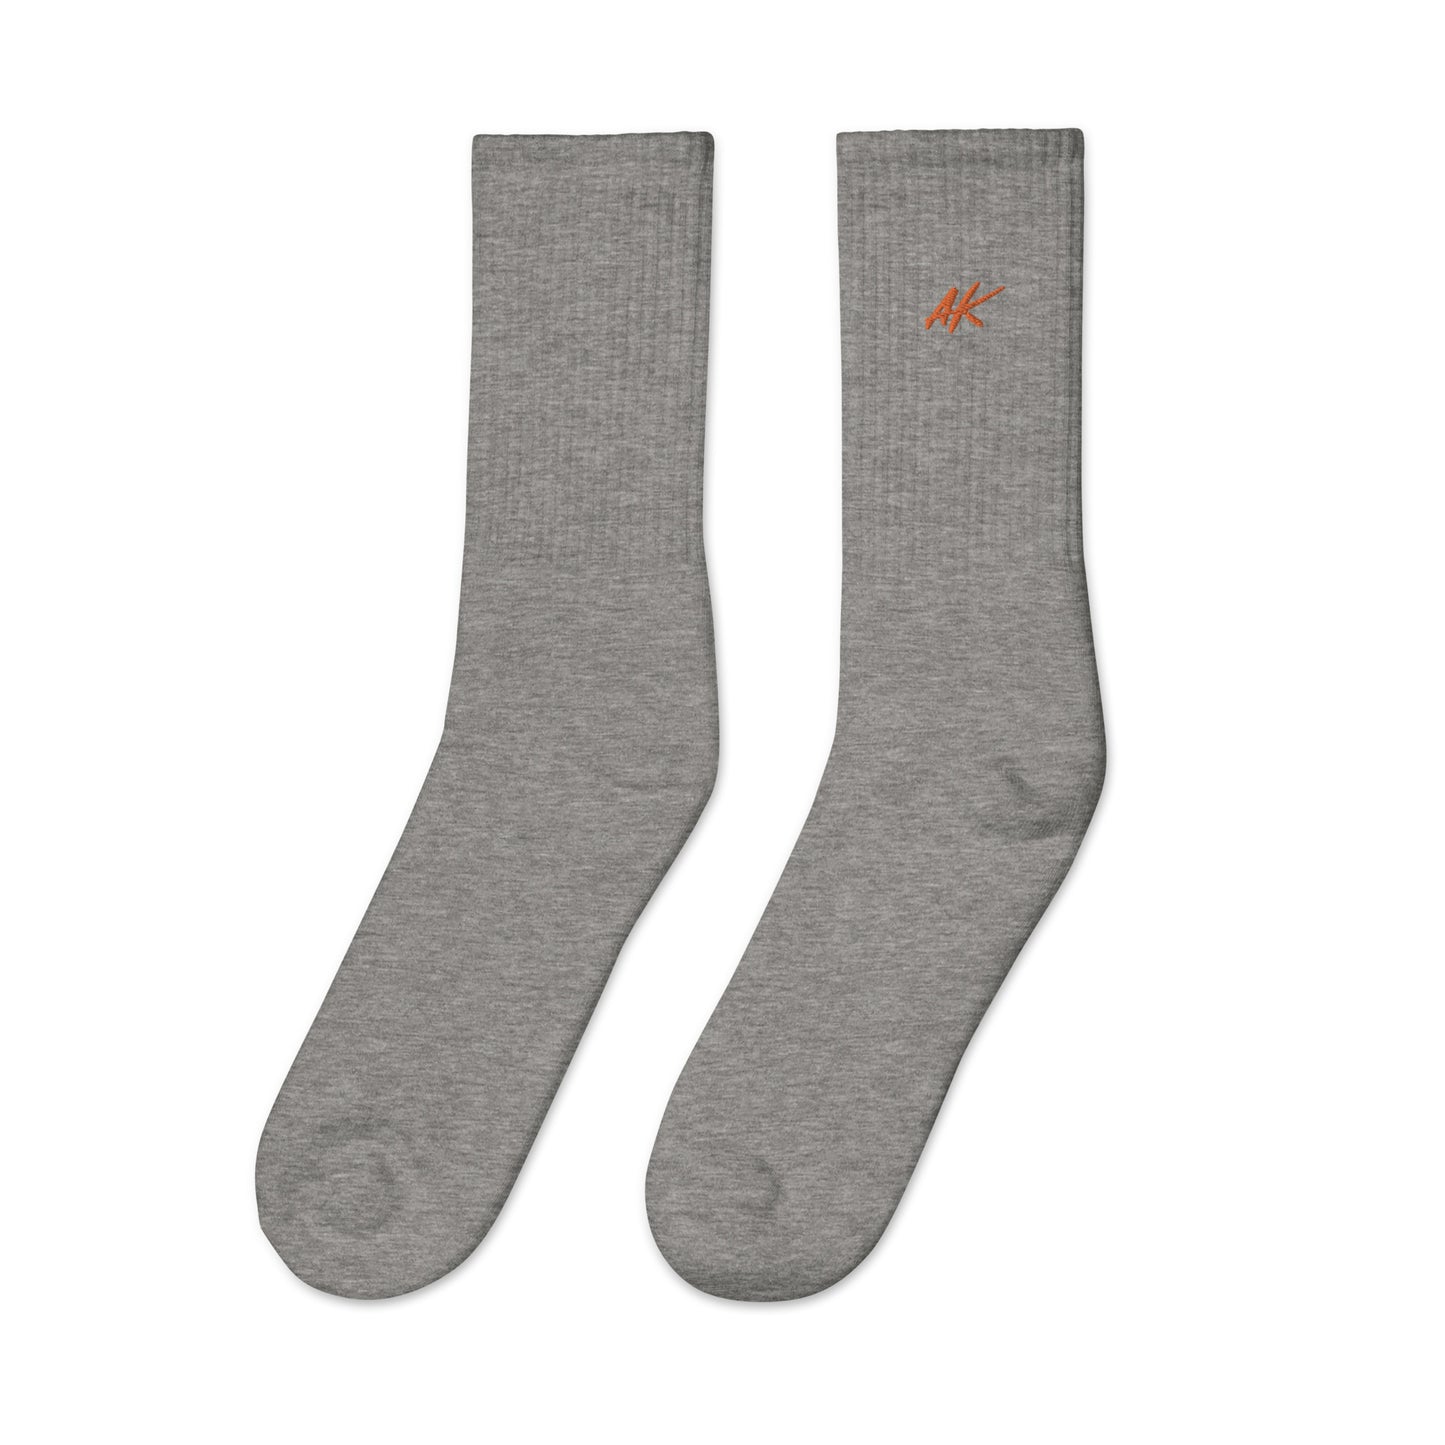 AK socks (orange)